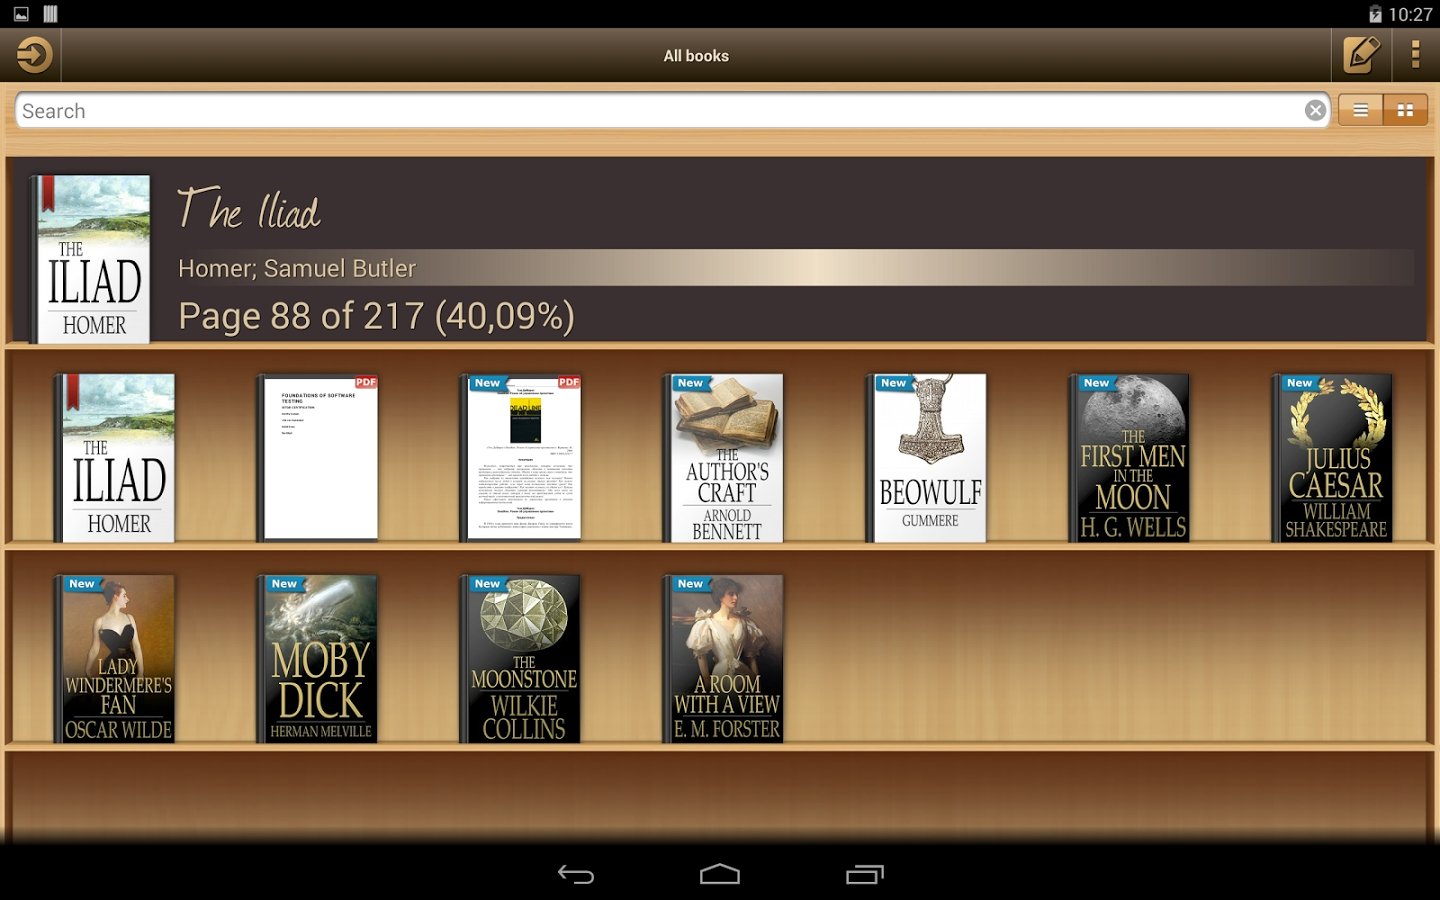 ebook reader for windows 10 free download